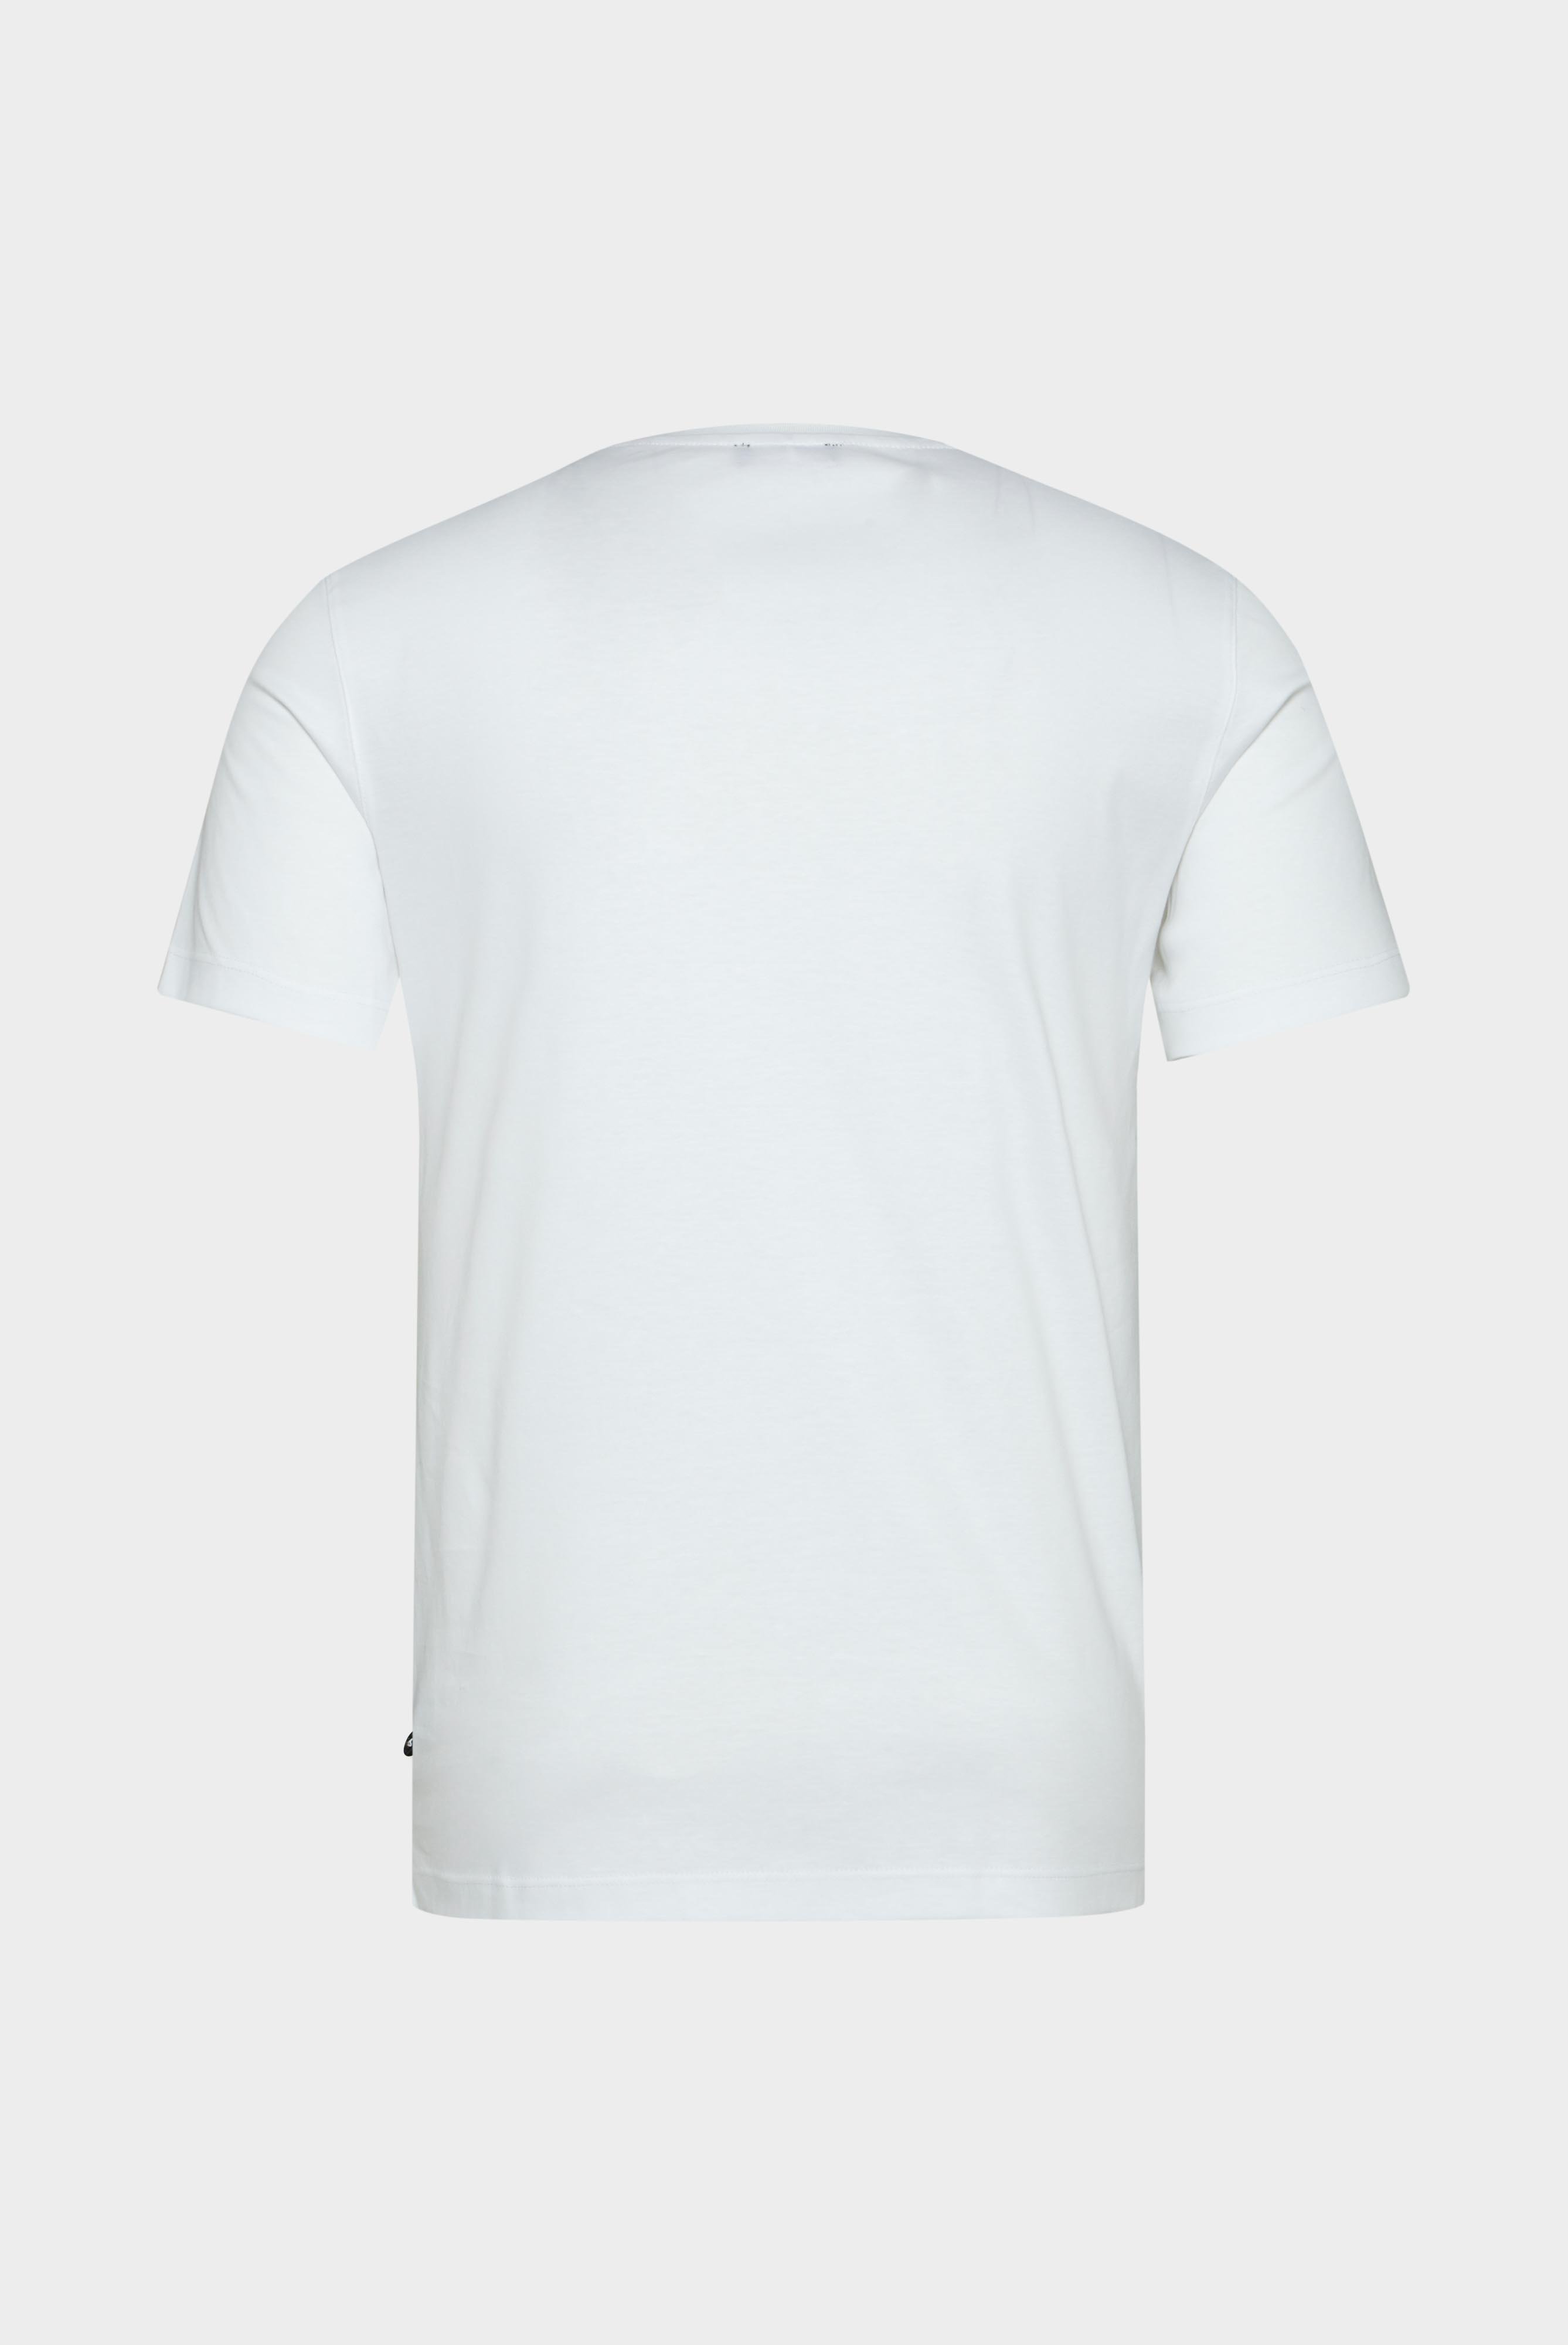 T-Shirts+Swiss Cotton Jersey Crew Neck T-Shirt+20.1717.UX.180031.000.X3L